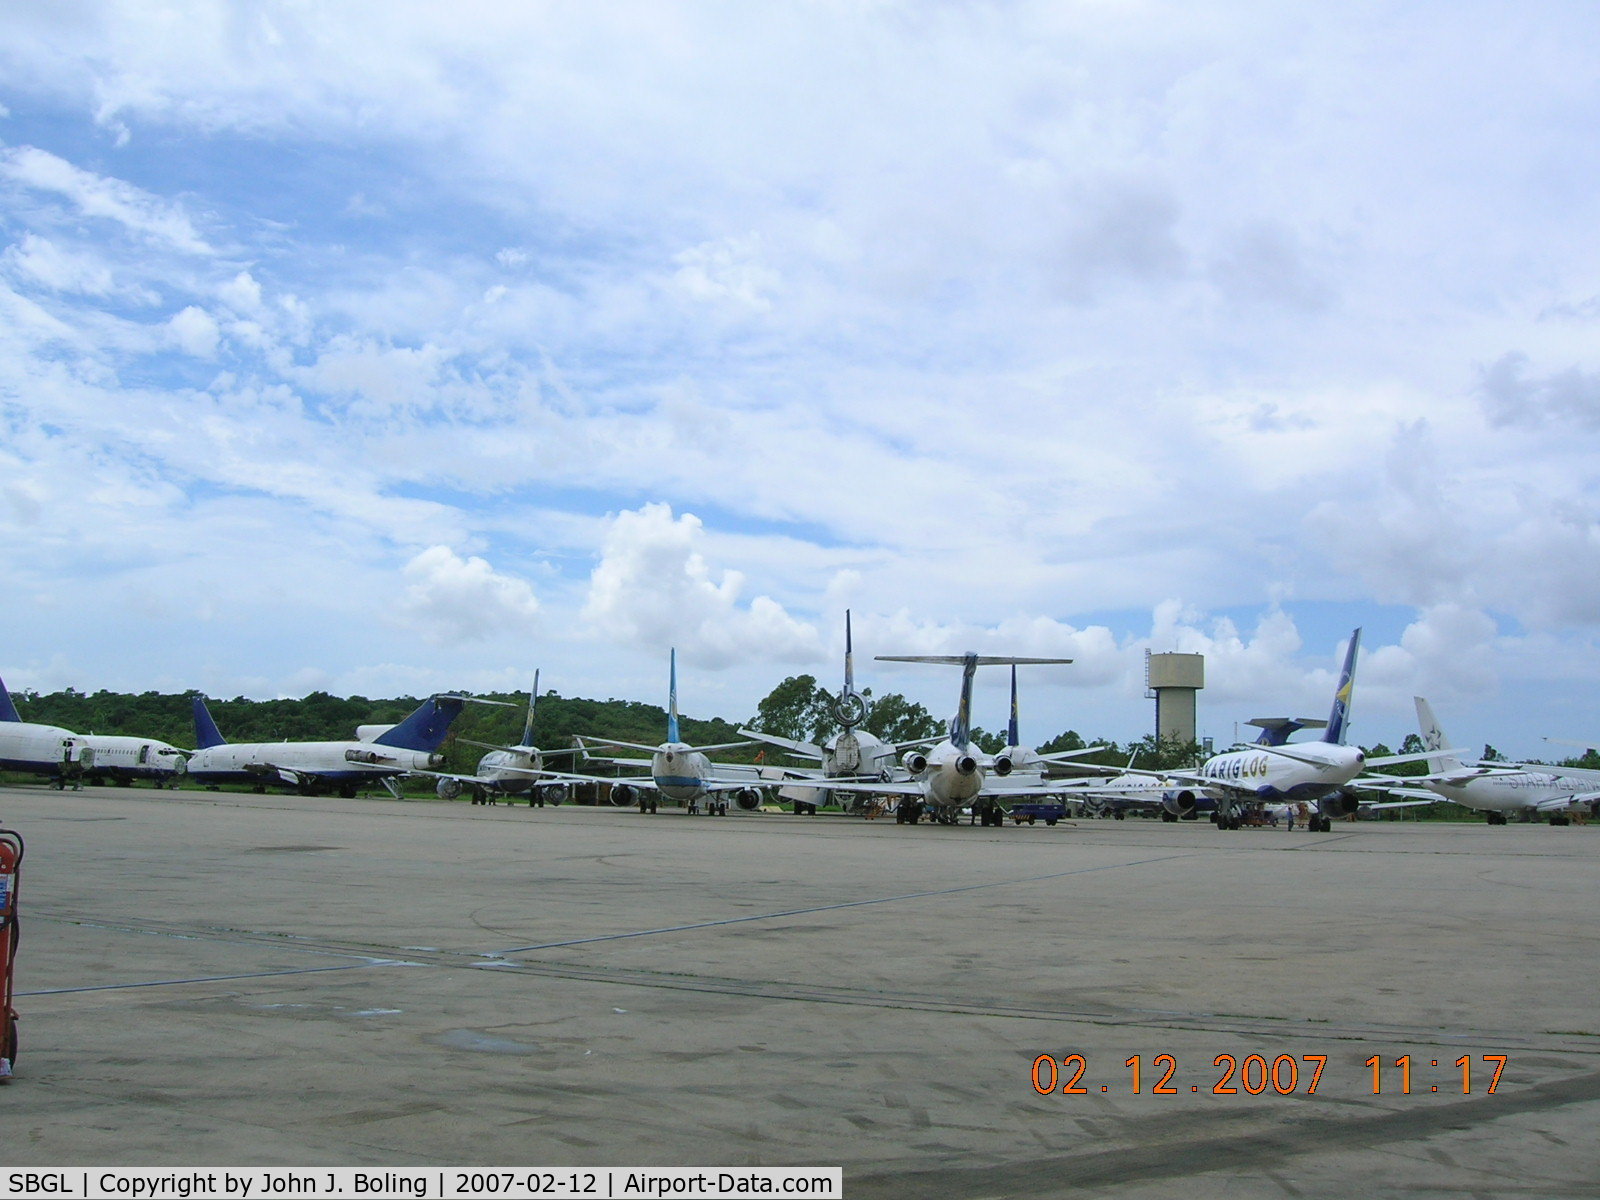 Galeão Airport, Antônio Carlos Jobim International Airport Brazil (SBGL) - Sad sight - former Varig aircraft parked at Rio